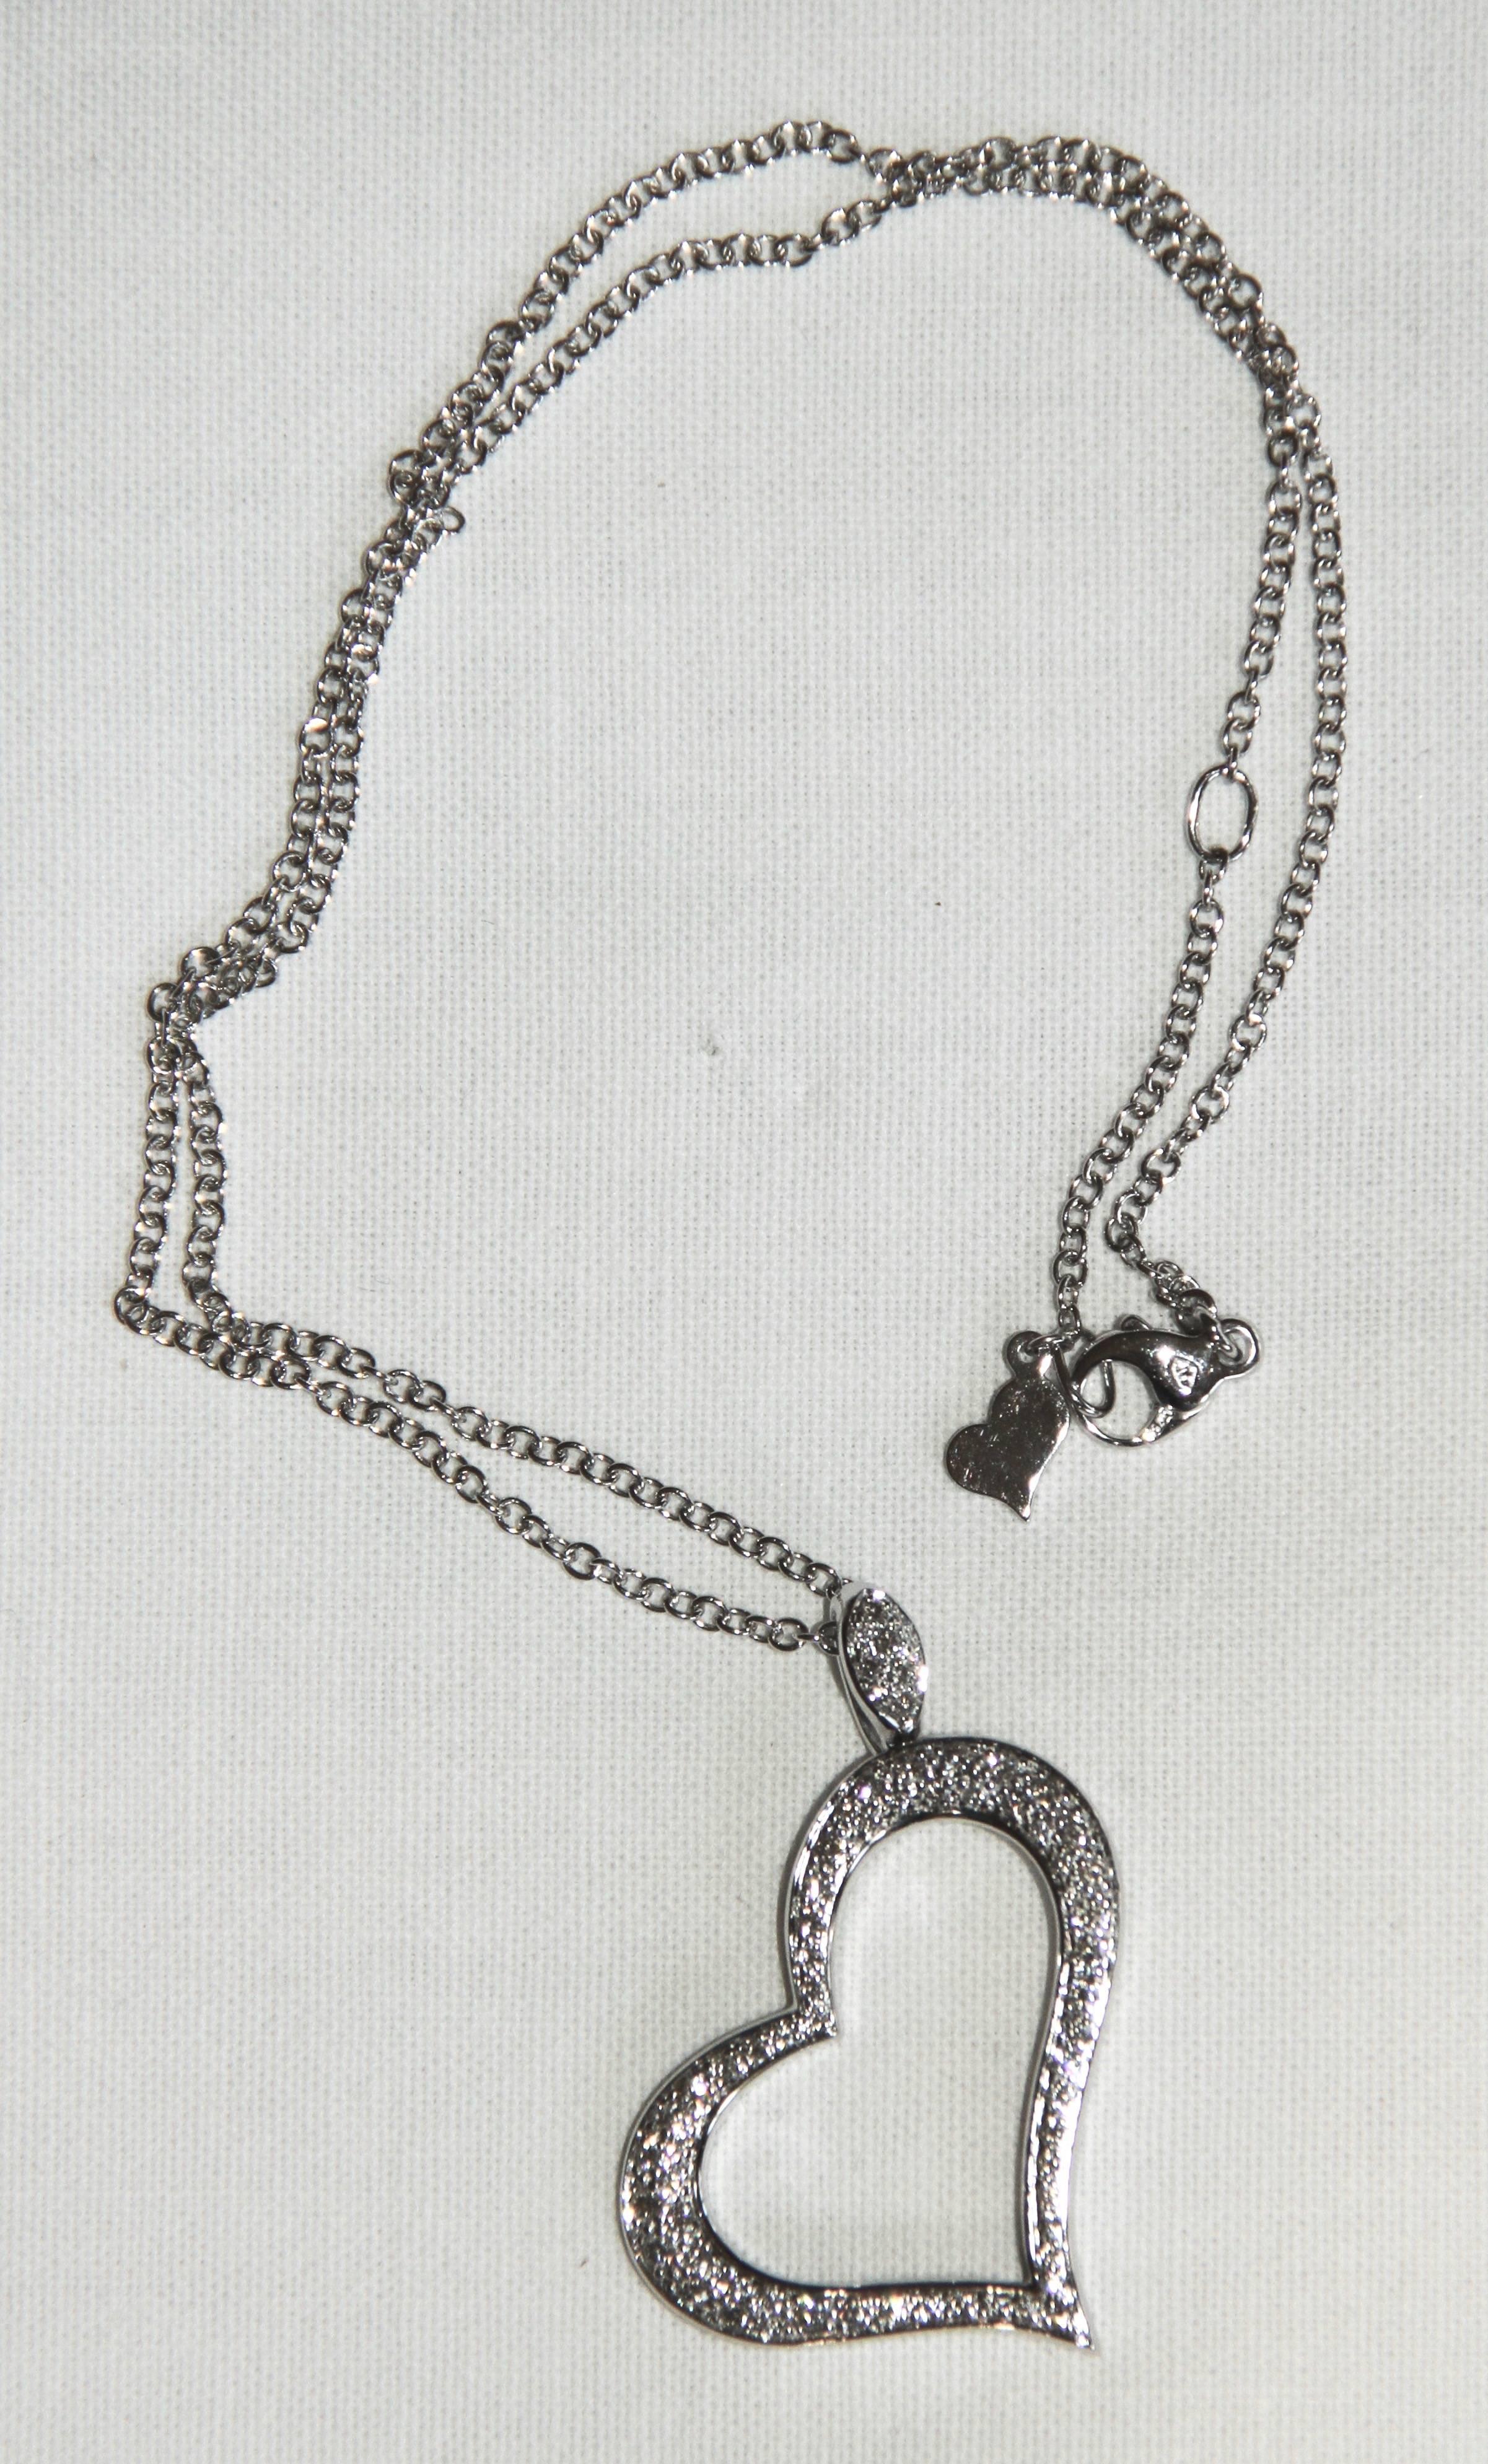 Brilliant Cut Piaget Heart-Shaped 18 Karat White Gold Pendant Necklace with Diamonds